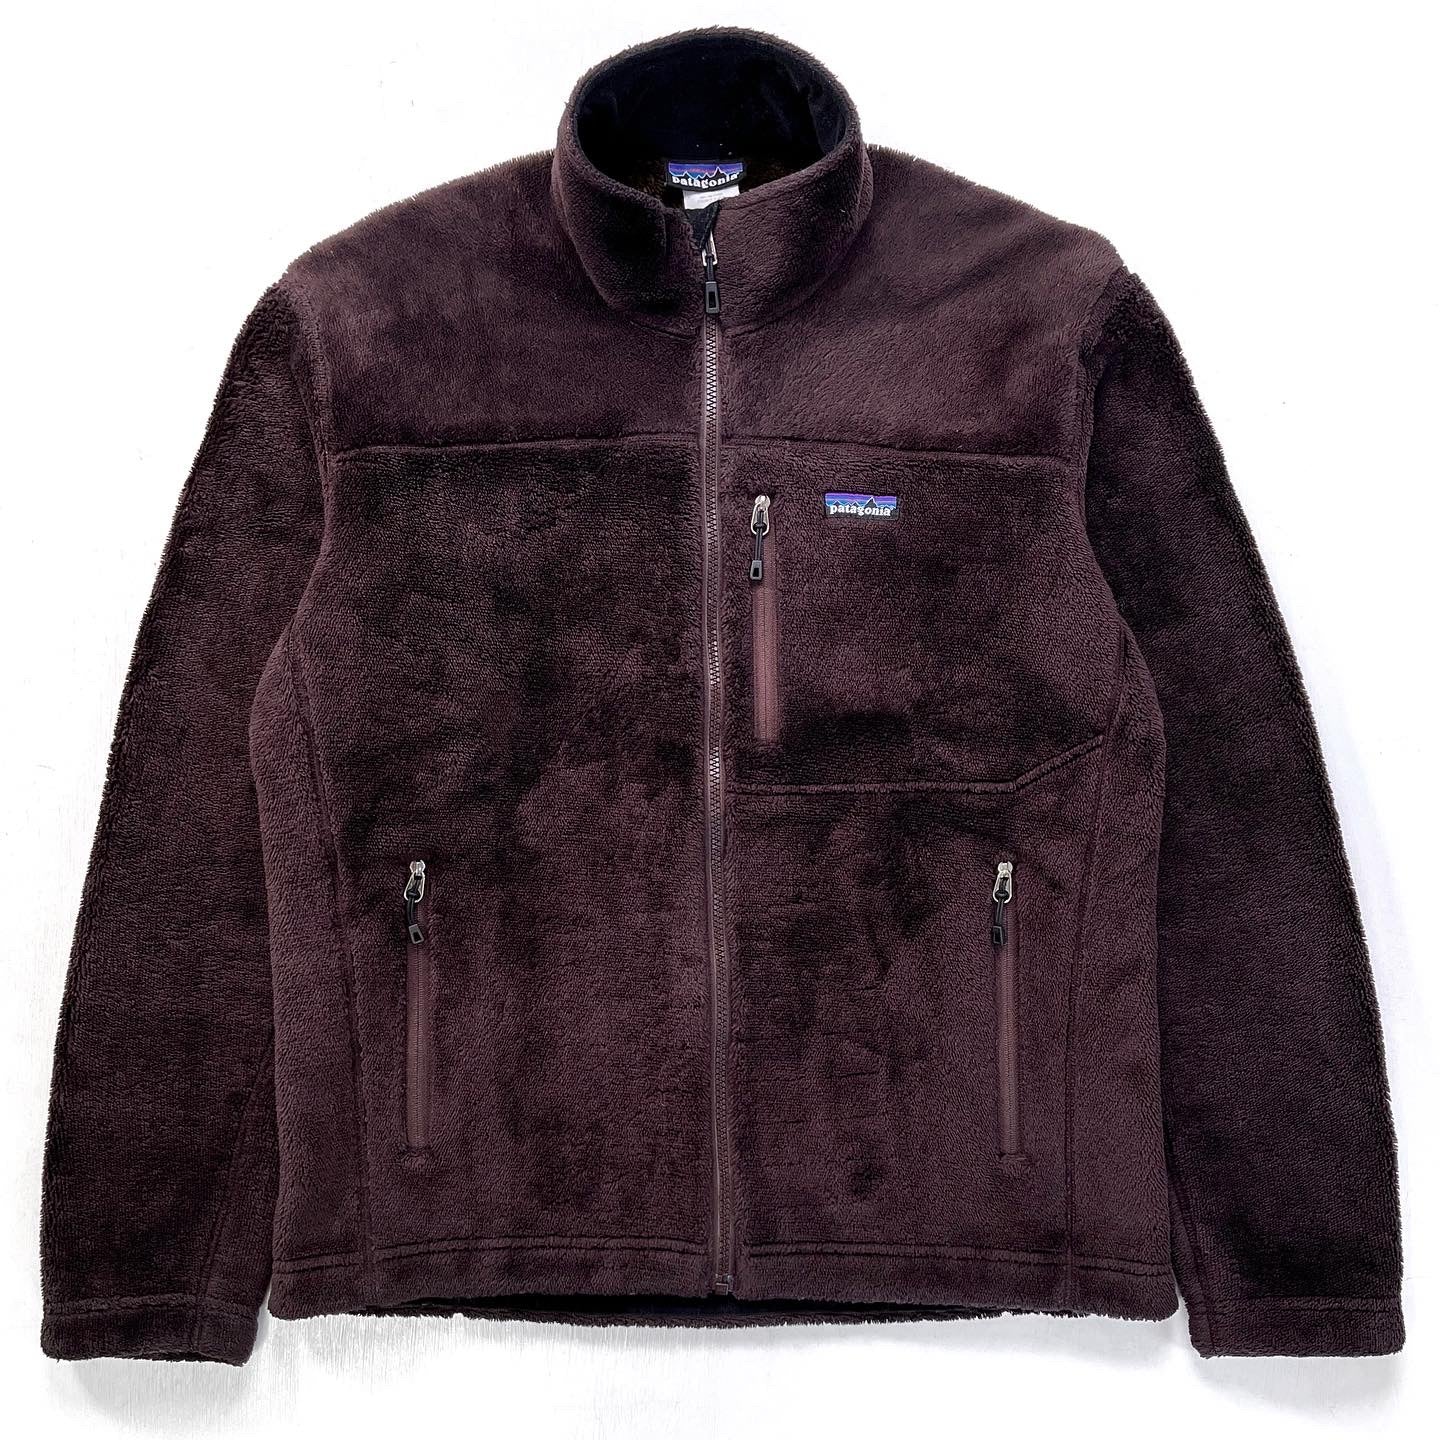 2010 Patagonia Mens R4 Fleece Jacket, Bitter Chocolate (M)